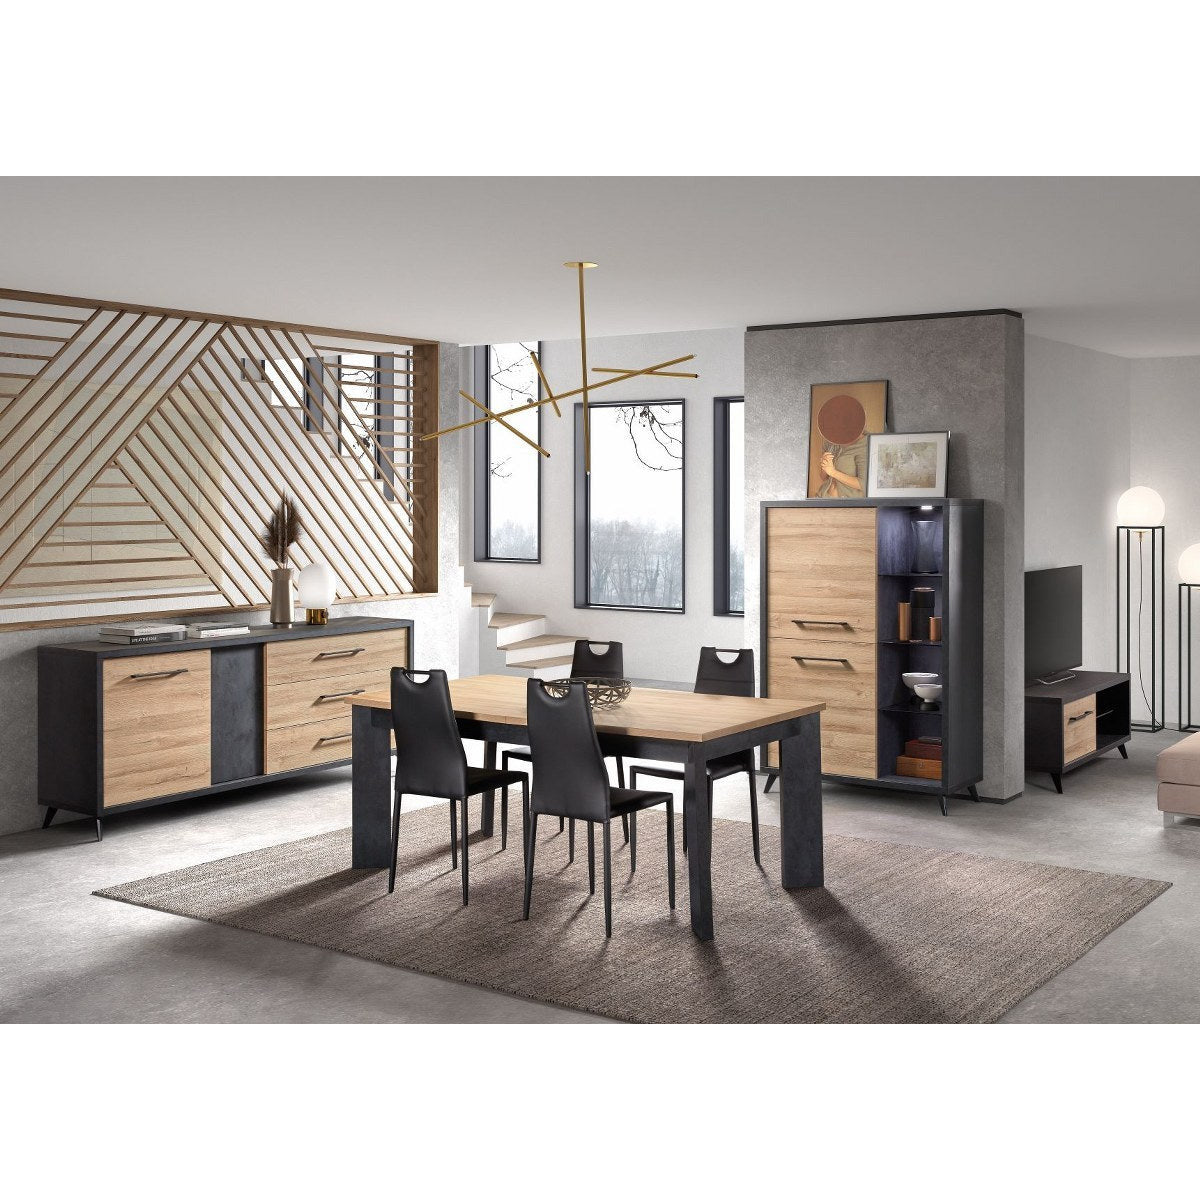 Dresser | Furniture series Moulin | Natural, black | 220x50x